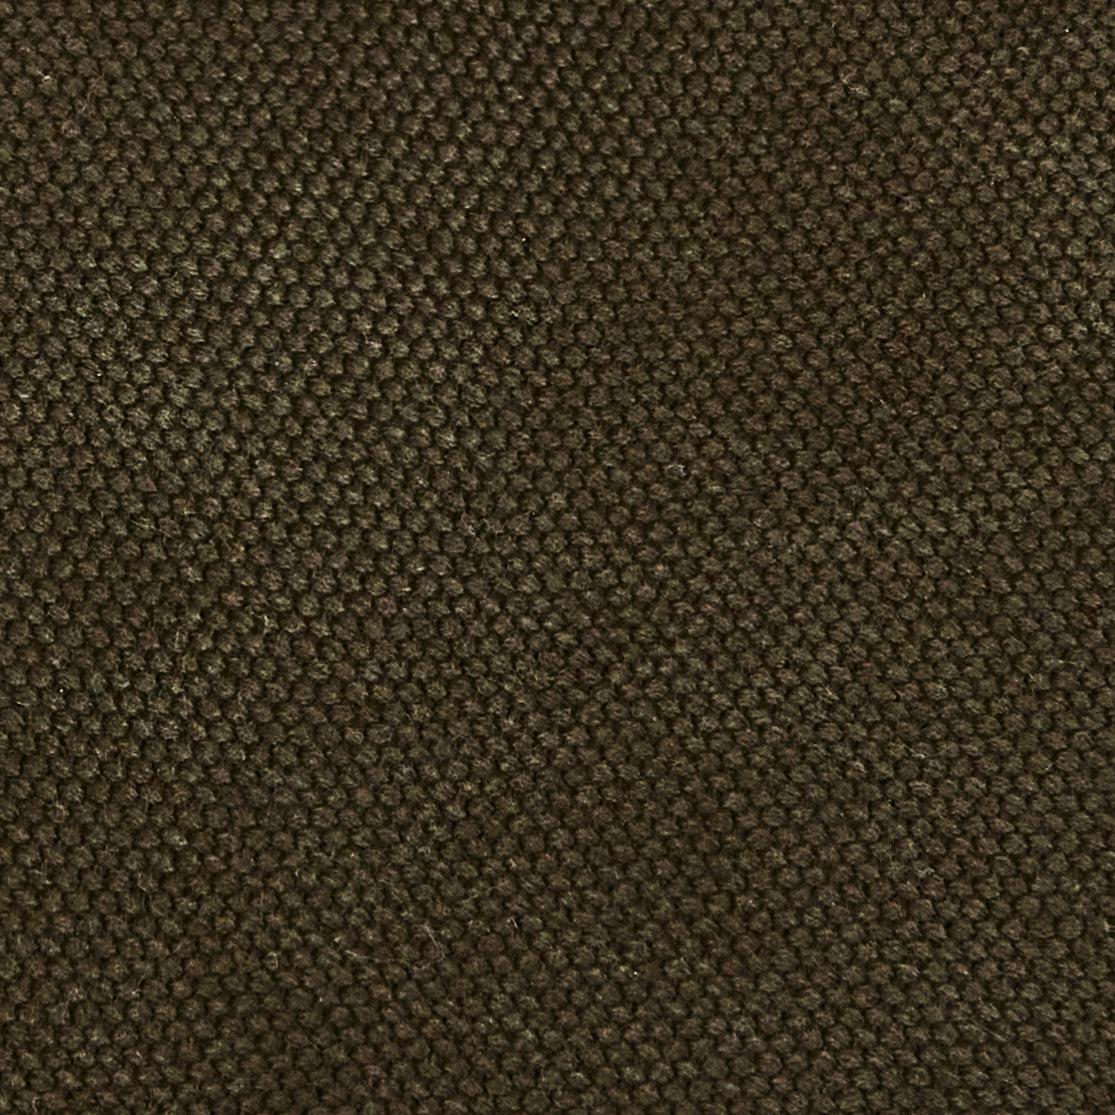 Erewhon Bag Fabric Details